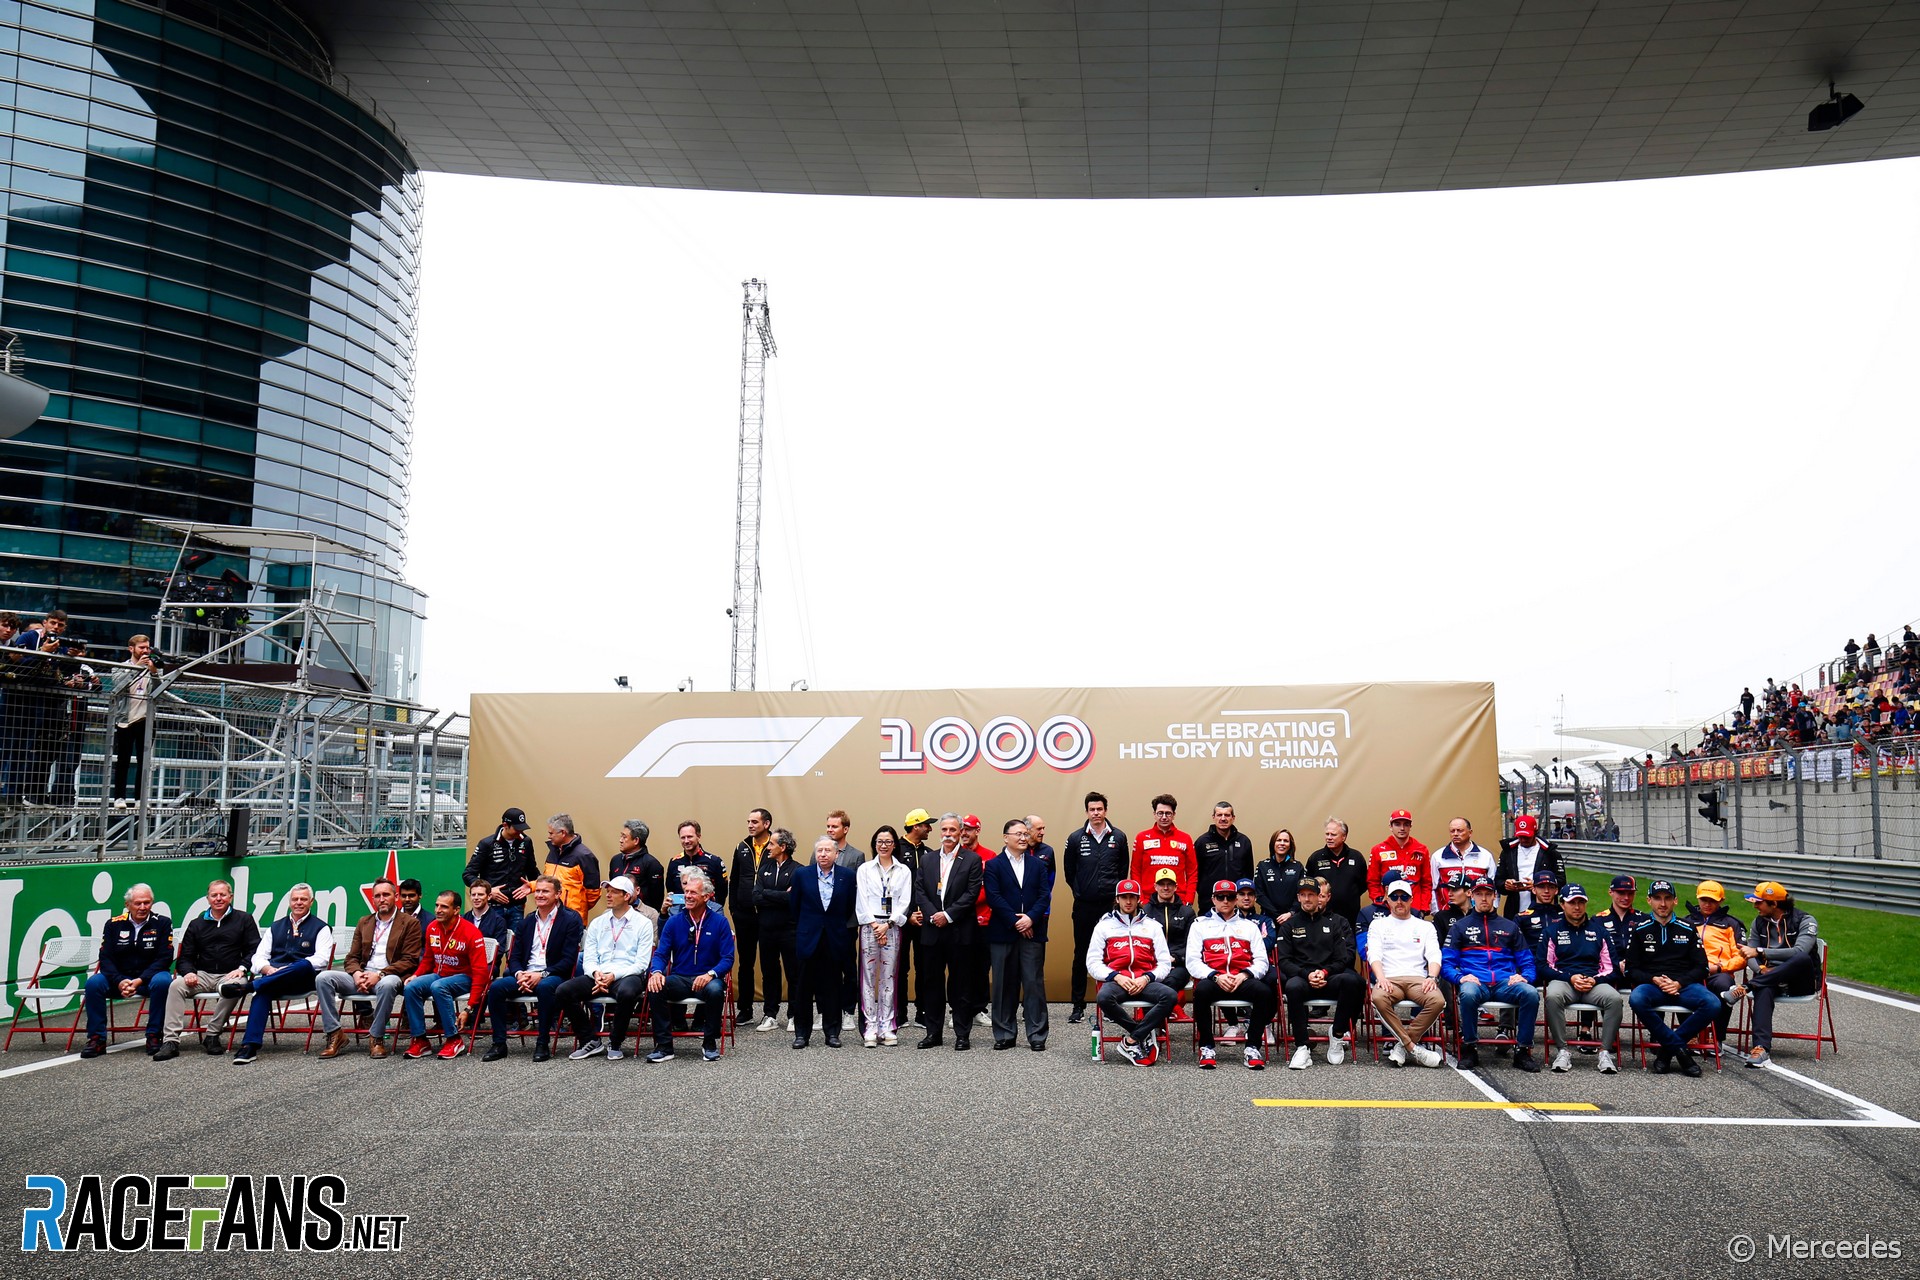 1000th race photograph, Mercedes, Shanghai International Circuit, 2019